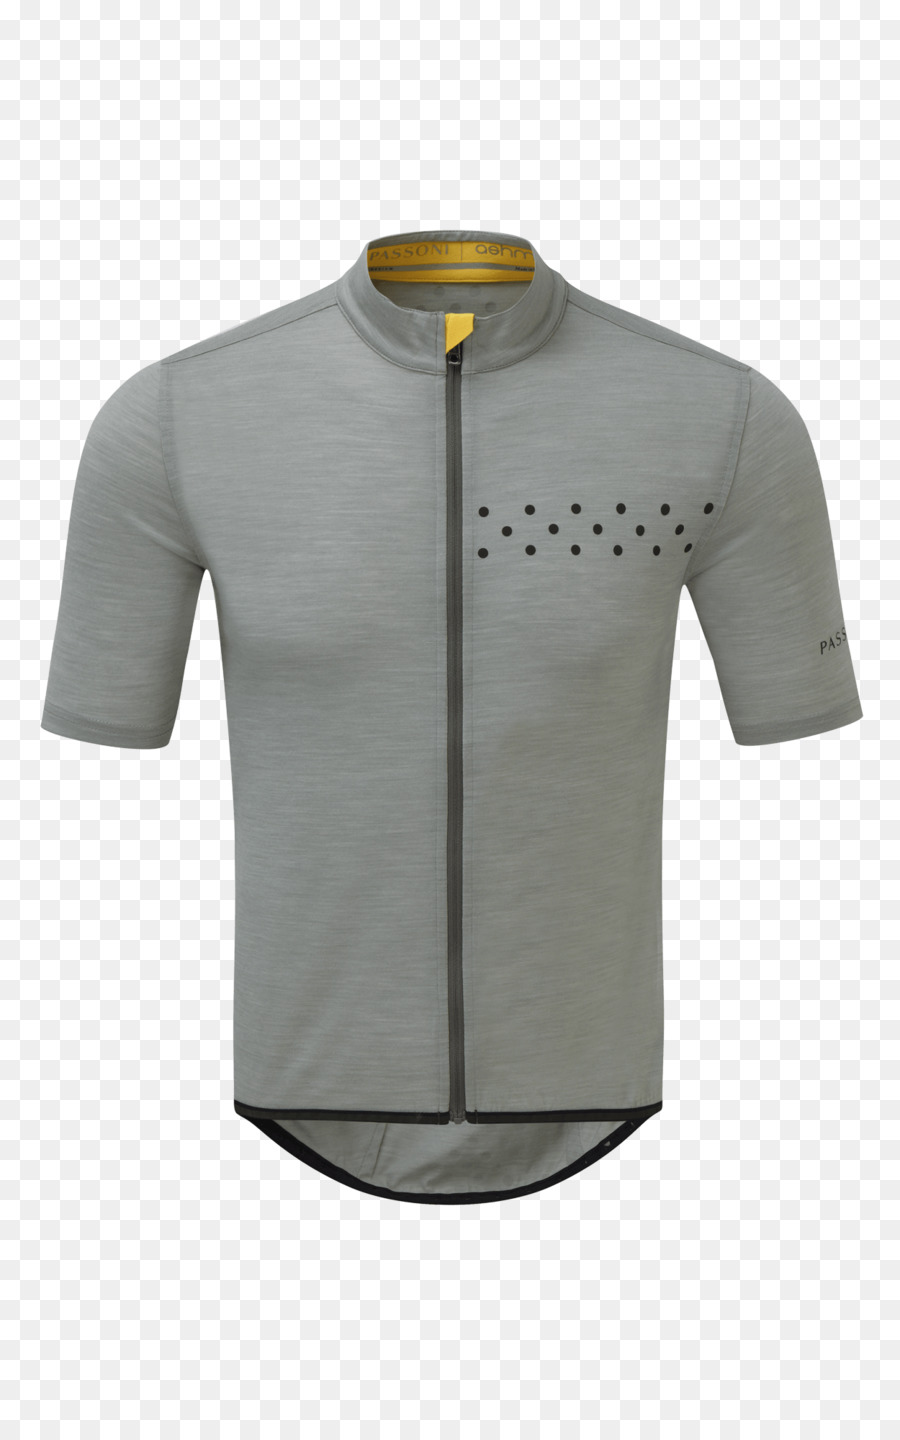 Fahrrad T-shirt Passoni Titan LTD Online-shopping-Radtrikot - Fahrrad